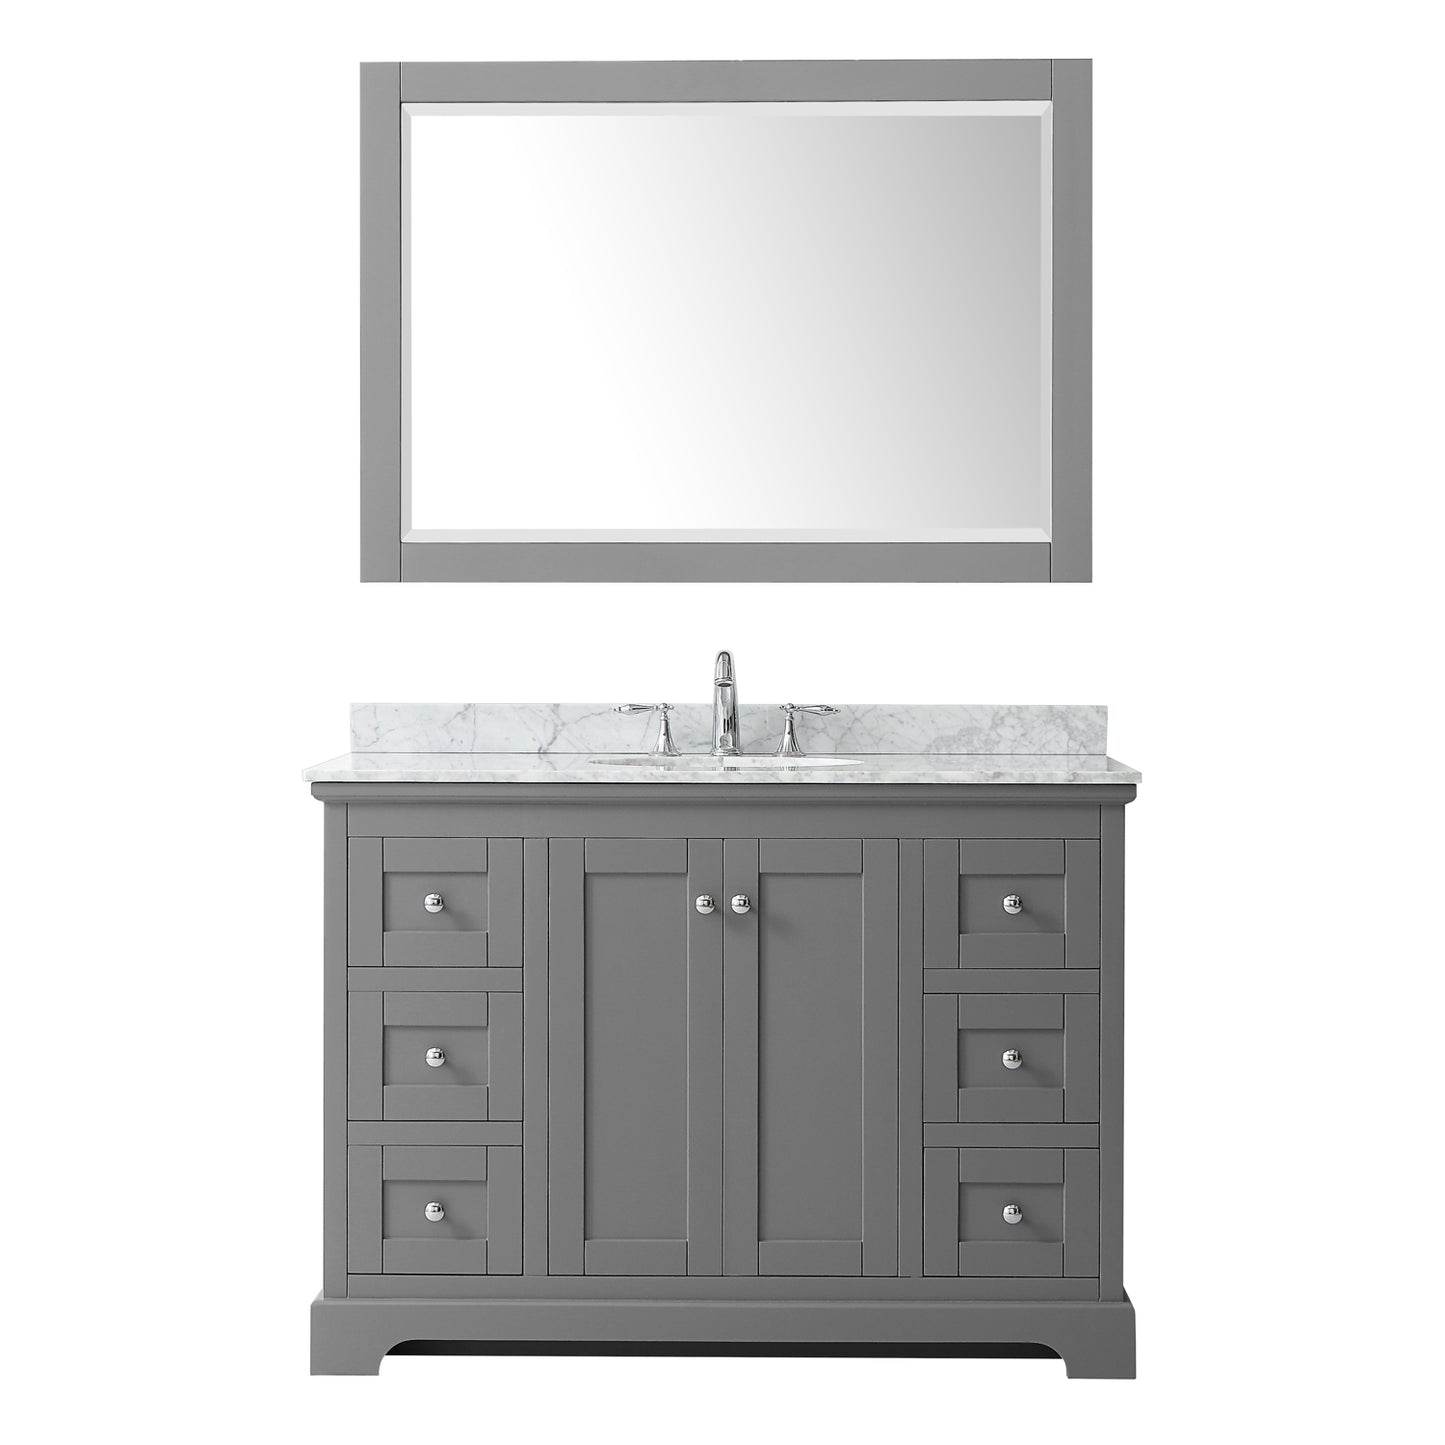 48 Inch Single Bathroom Vanity, White Carrara Marble Countertop, Undermount Oval Sink, and 46 Inch Mirror - Luxe Bathroom Vanities Luxury Bathroom Fixtures Bathroom Furniture